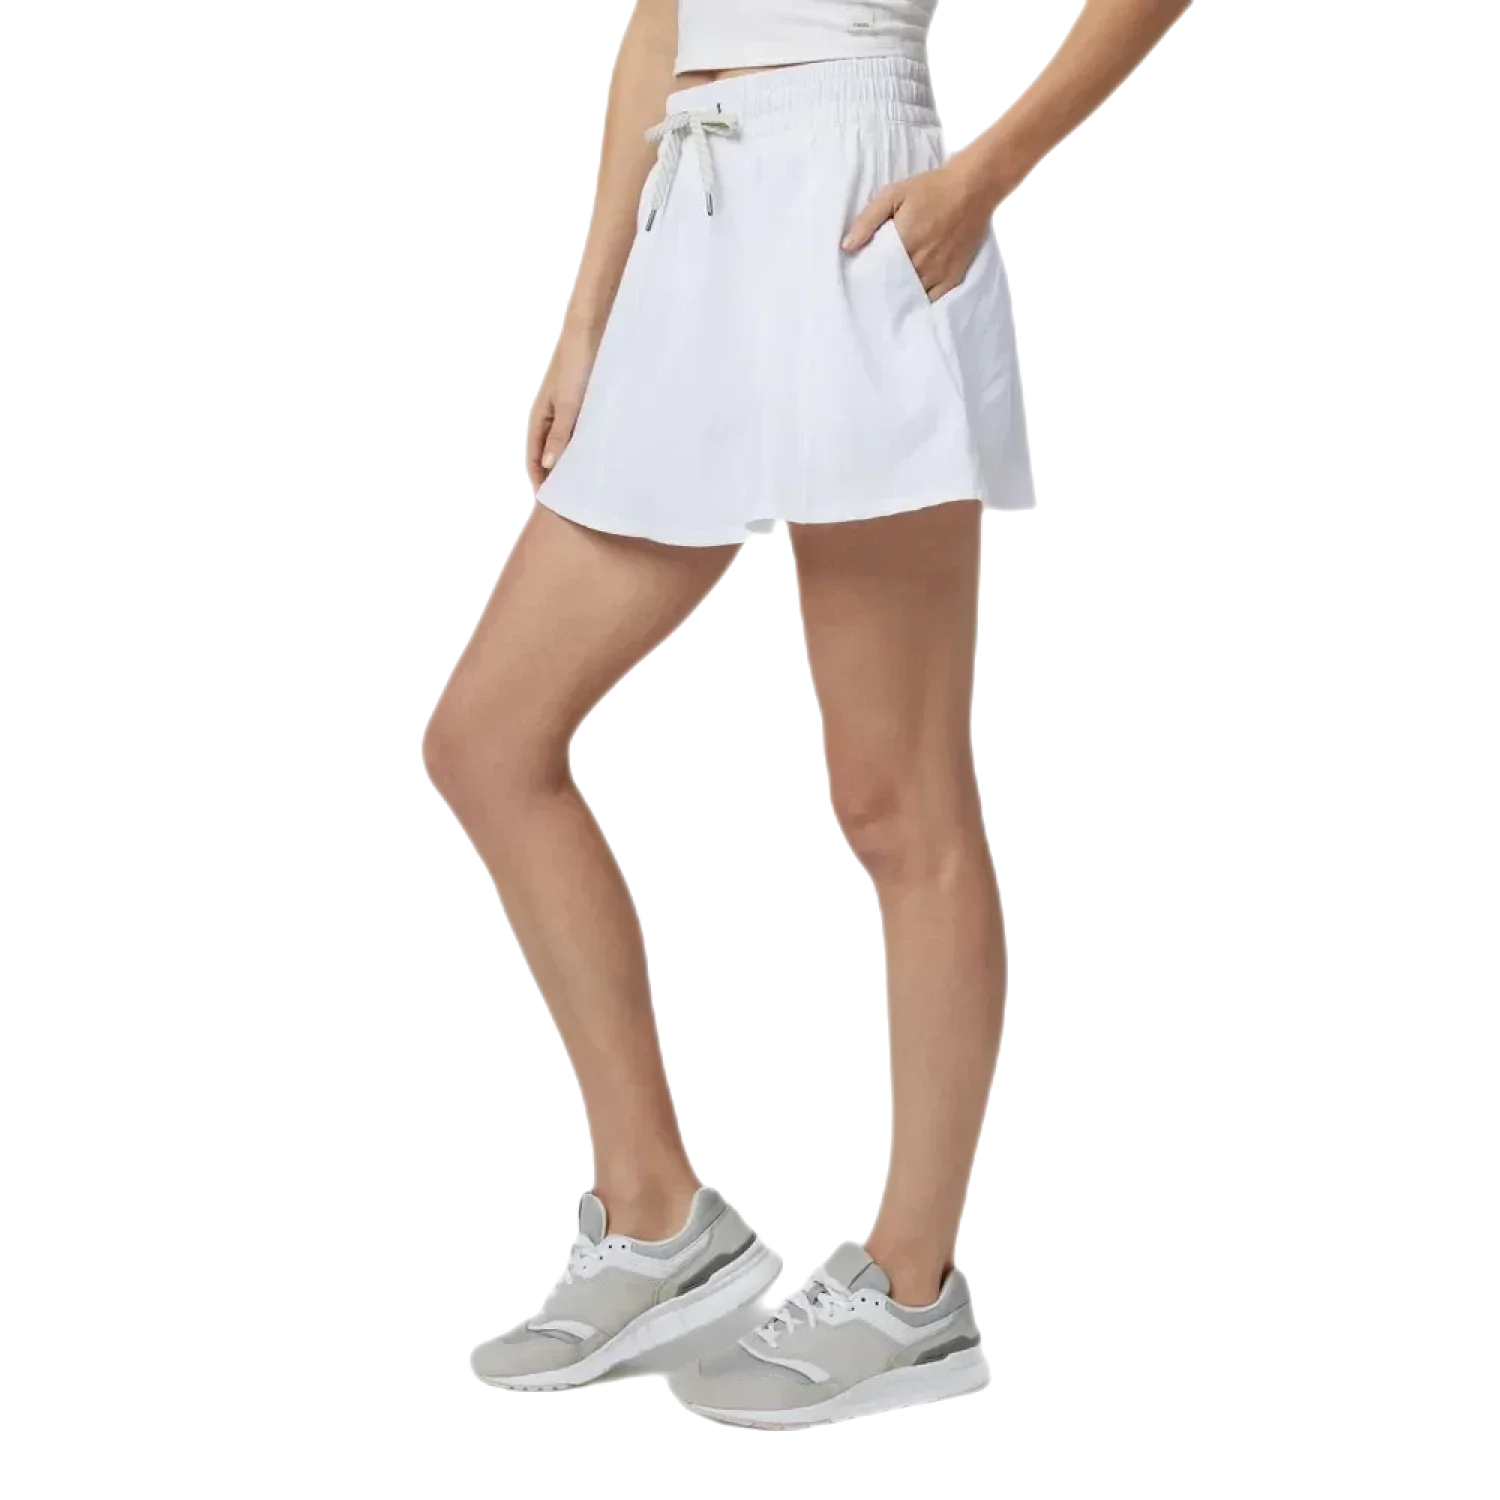 Vuori 02. WOMENS APPAREL - WOMENS DRESS|SKIRT - WOMENS SKIRT ACTIVE Women's Clementine Skirt WHT WHITE